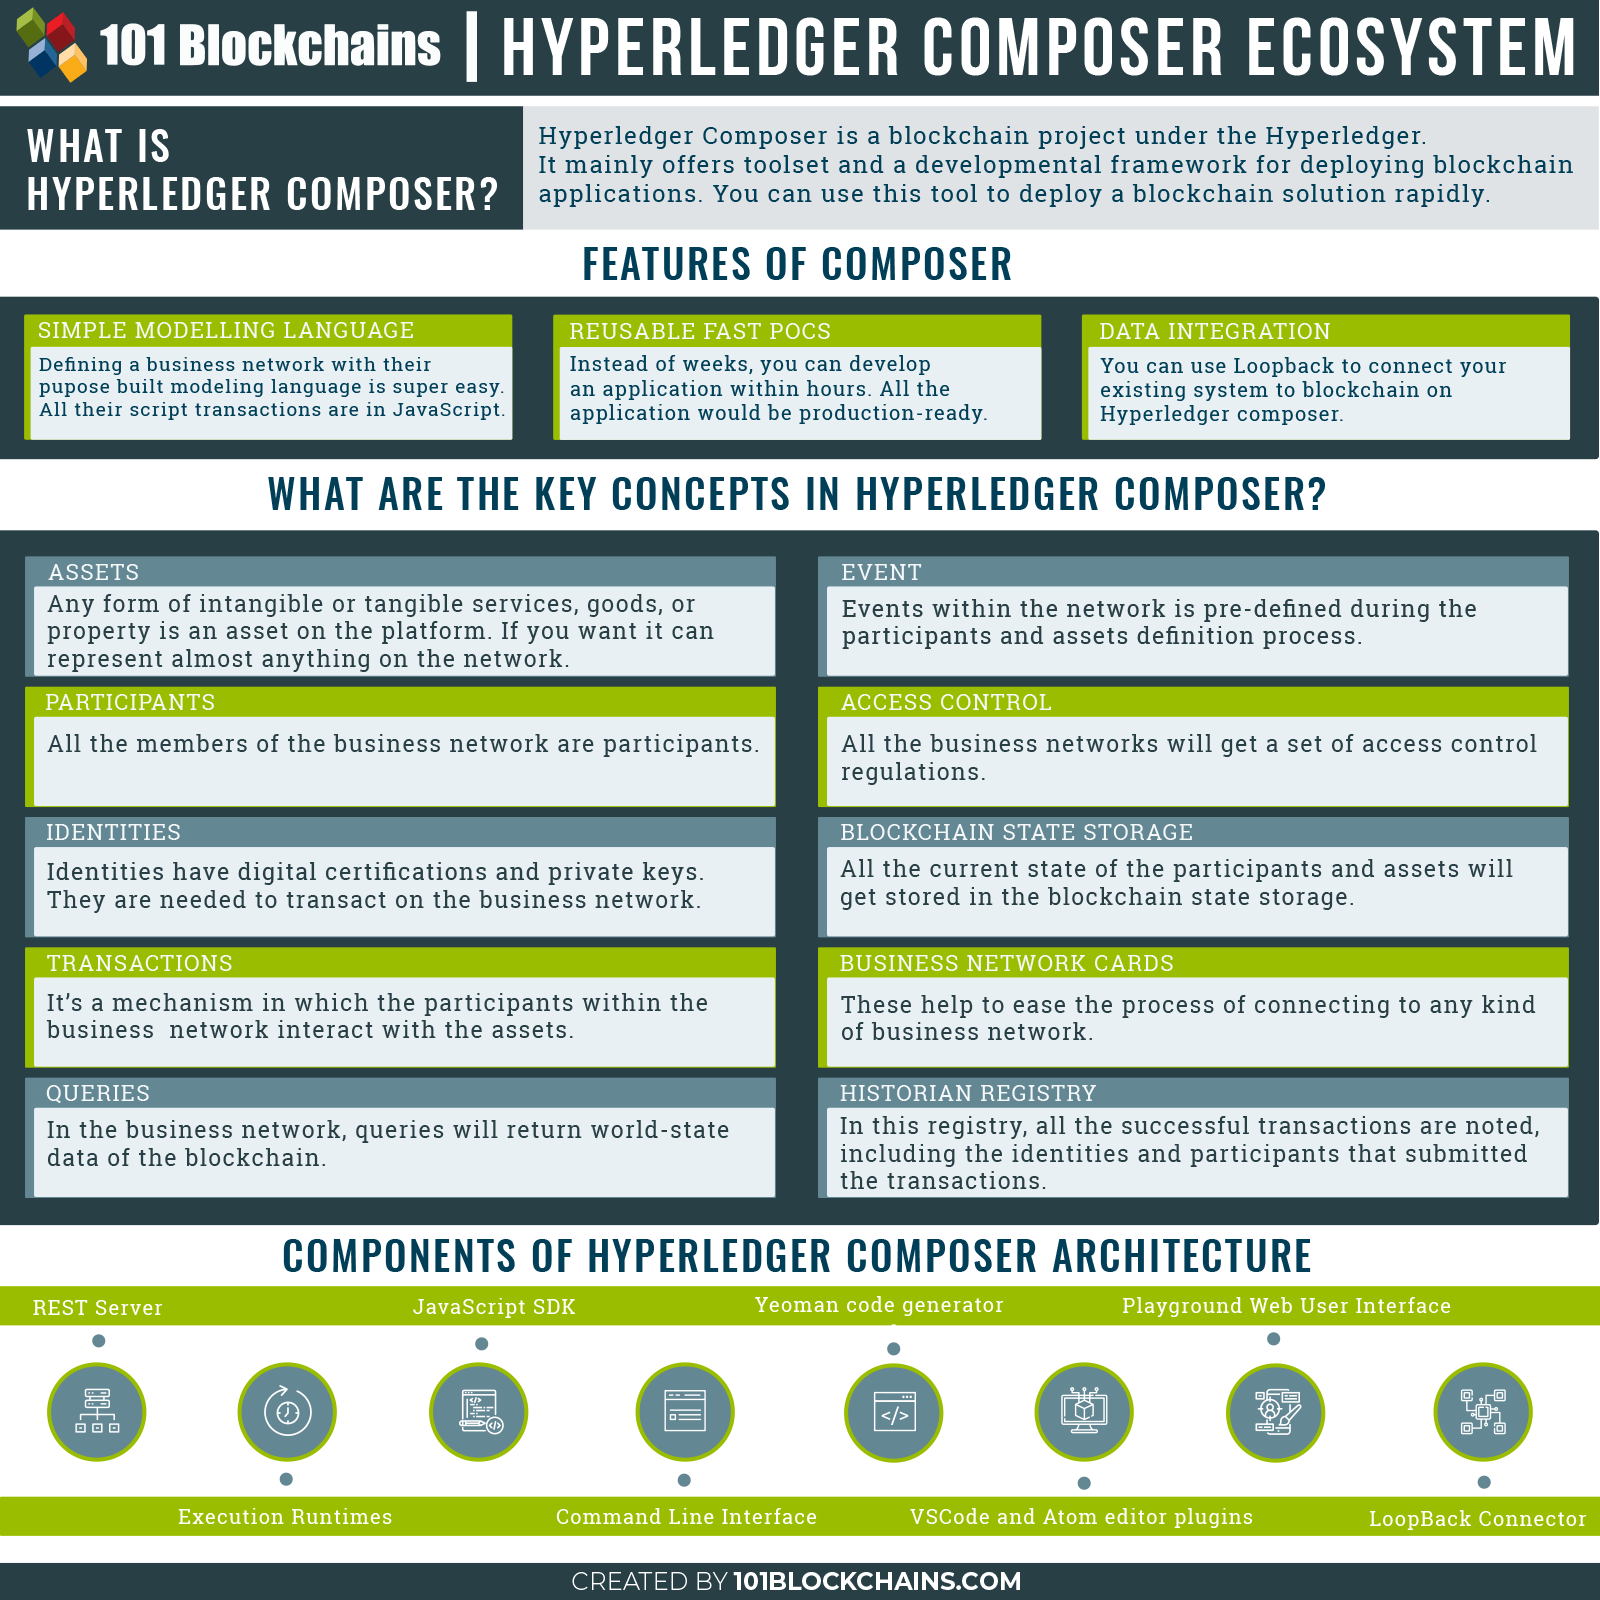 Hyperledger Composer: Build Your Enterprise Blockchain - 101 Blockchains